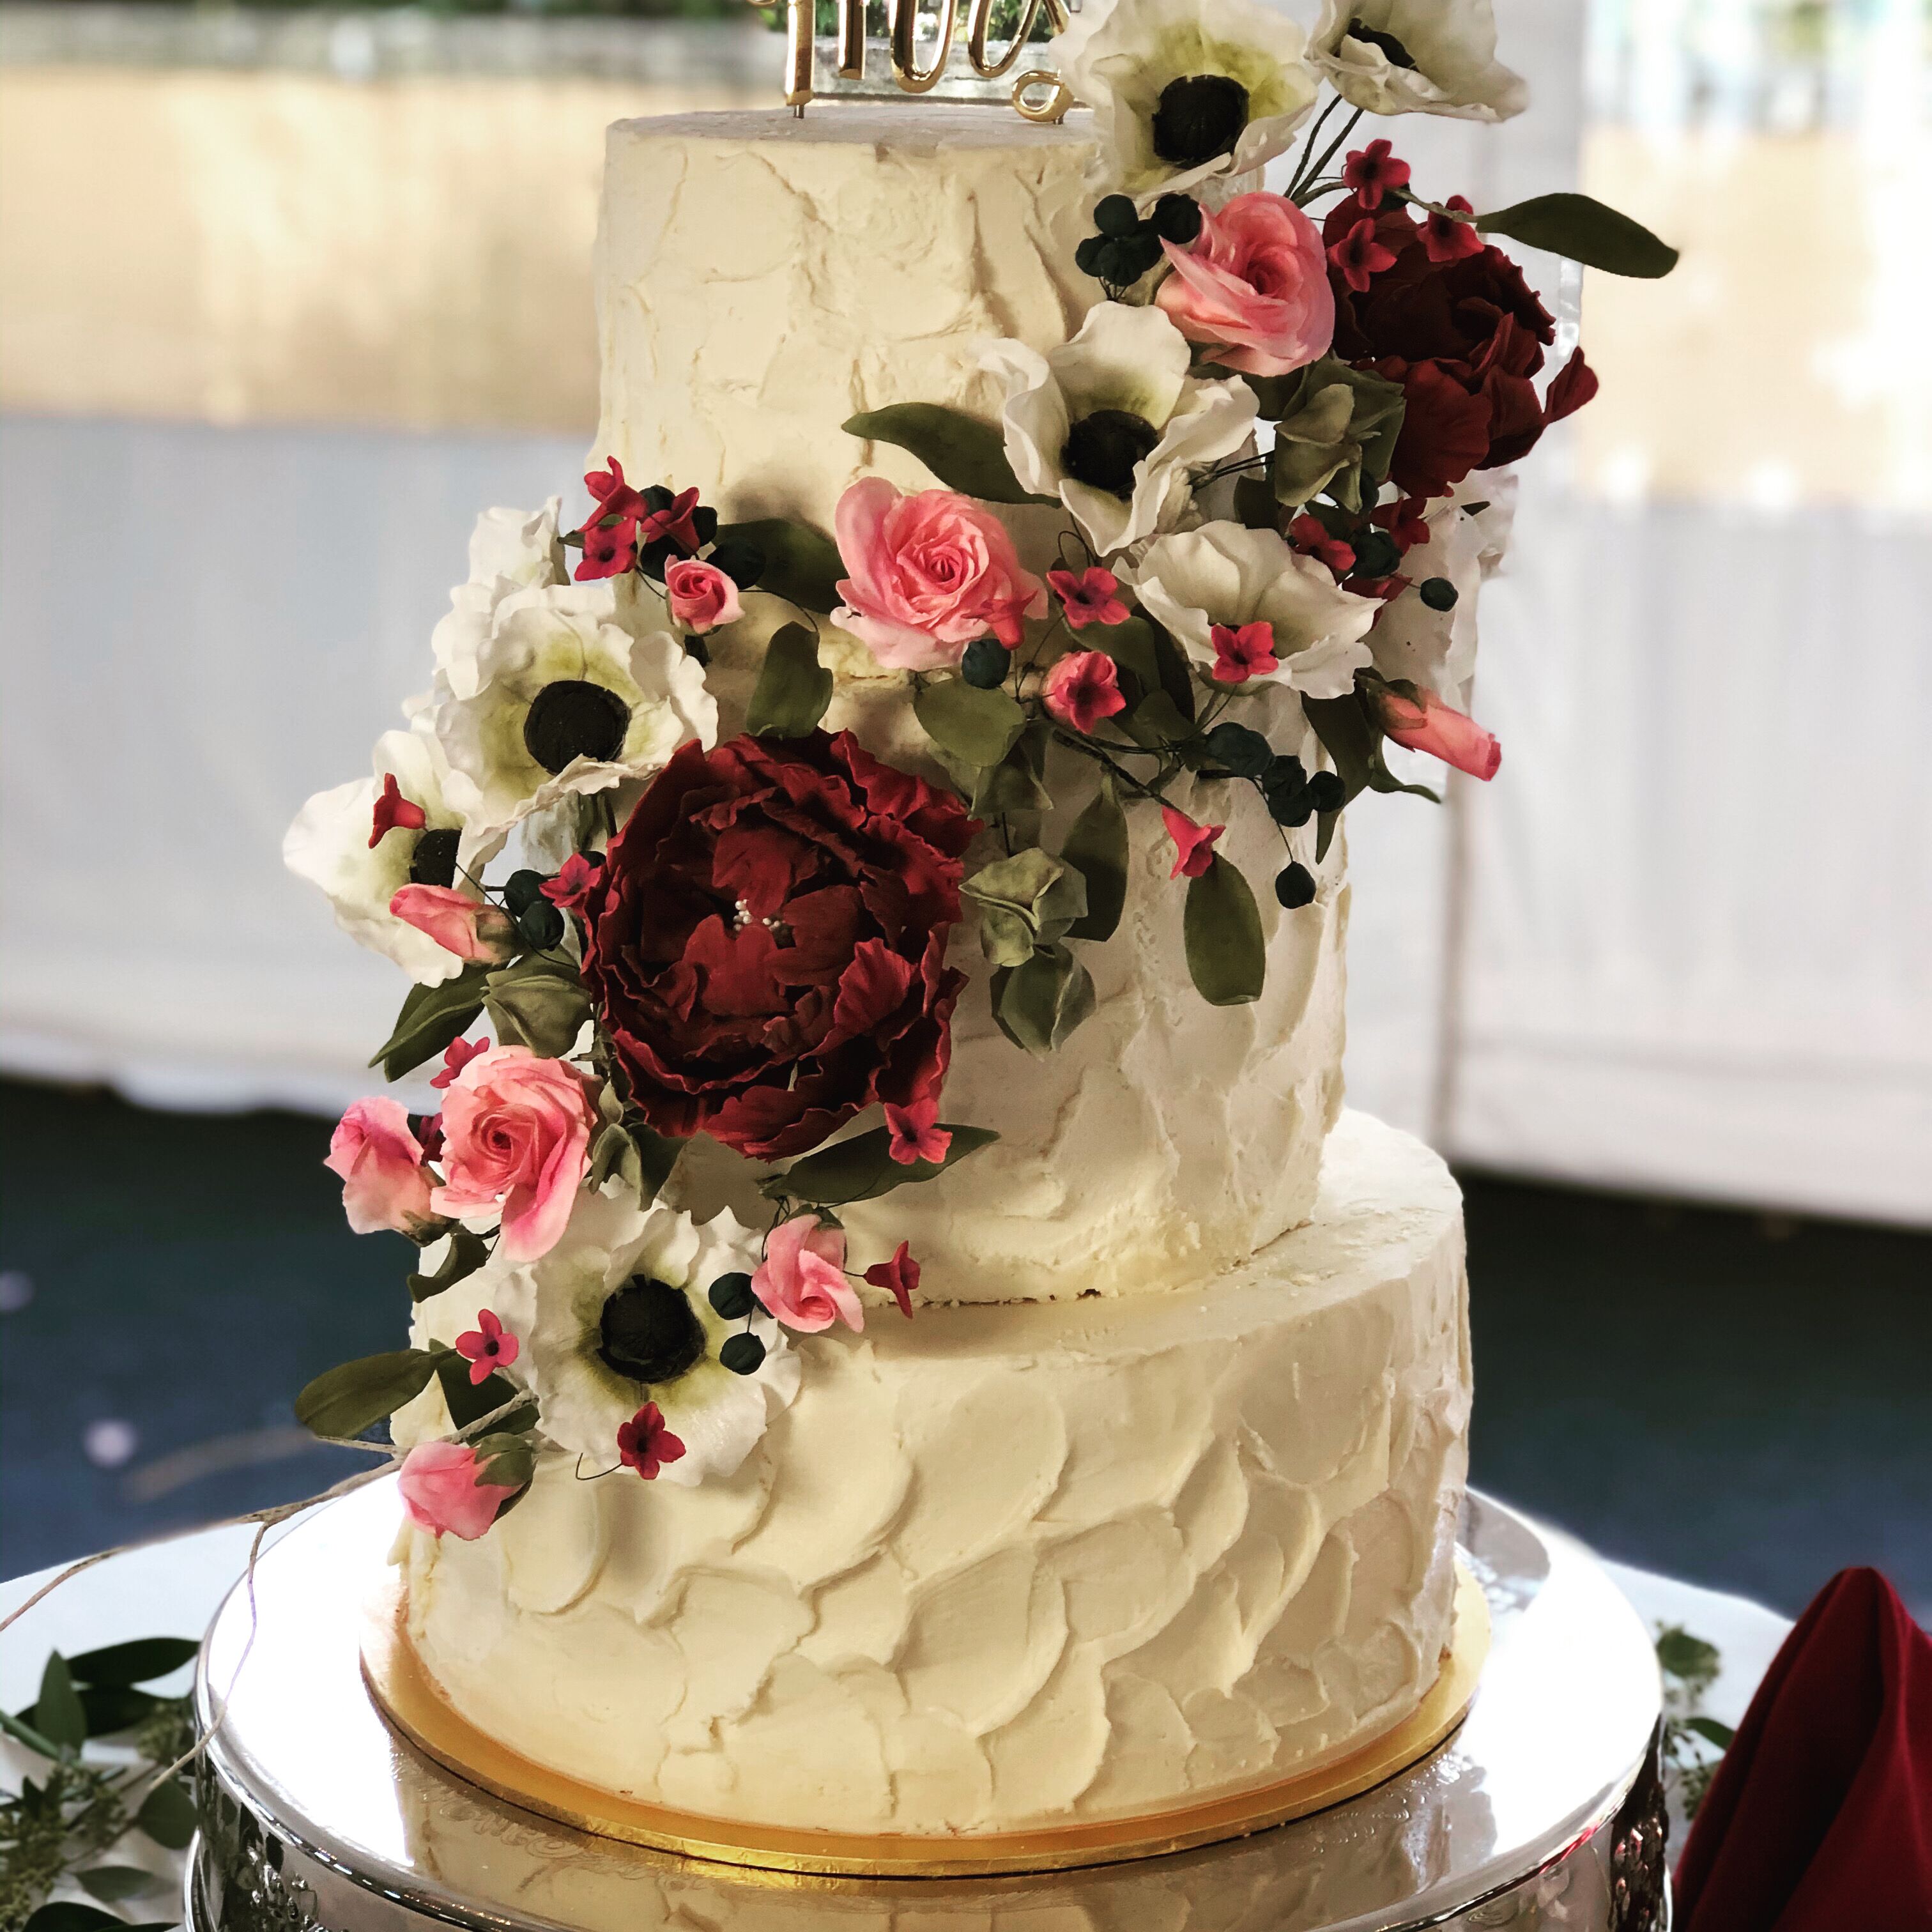 38 PC EDIBLE SUGAR FLOWERS CUP CAKE BIRTHDAY ANNIVERSARY ENGAGEMENT WEDDING BABY